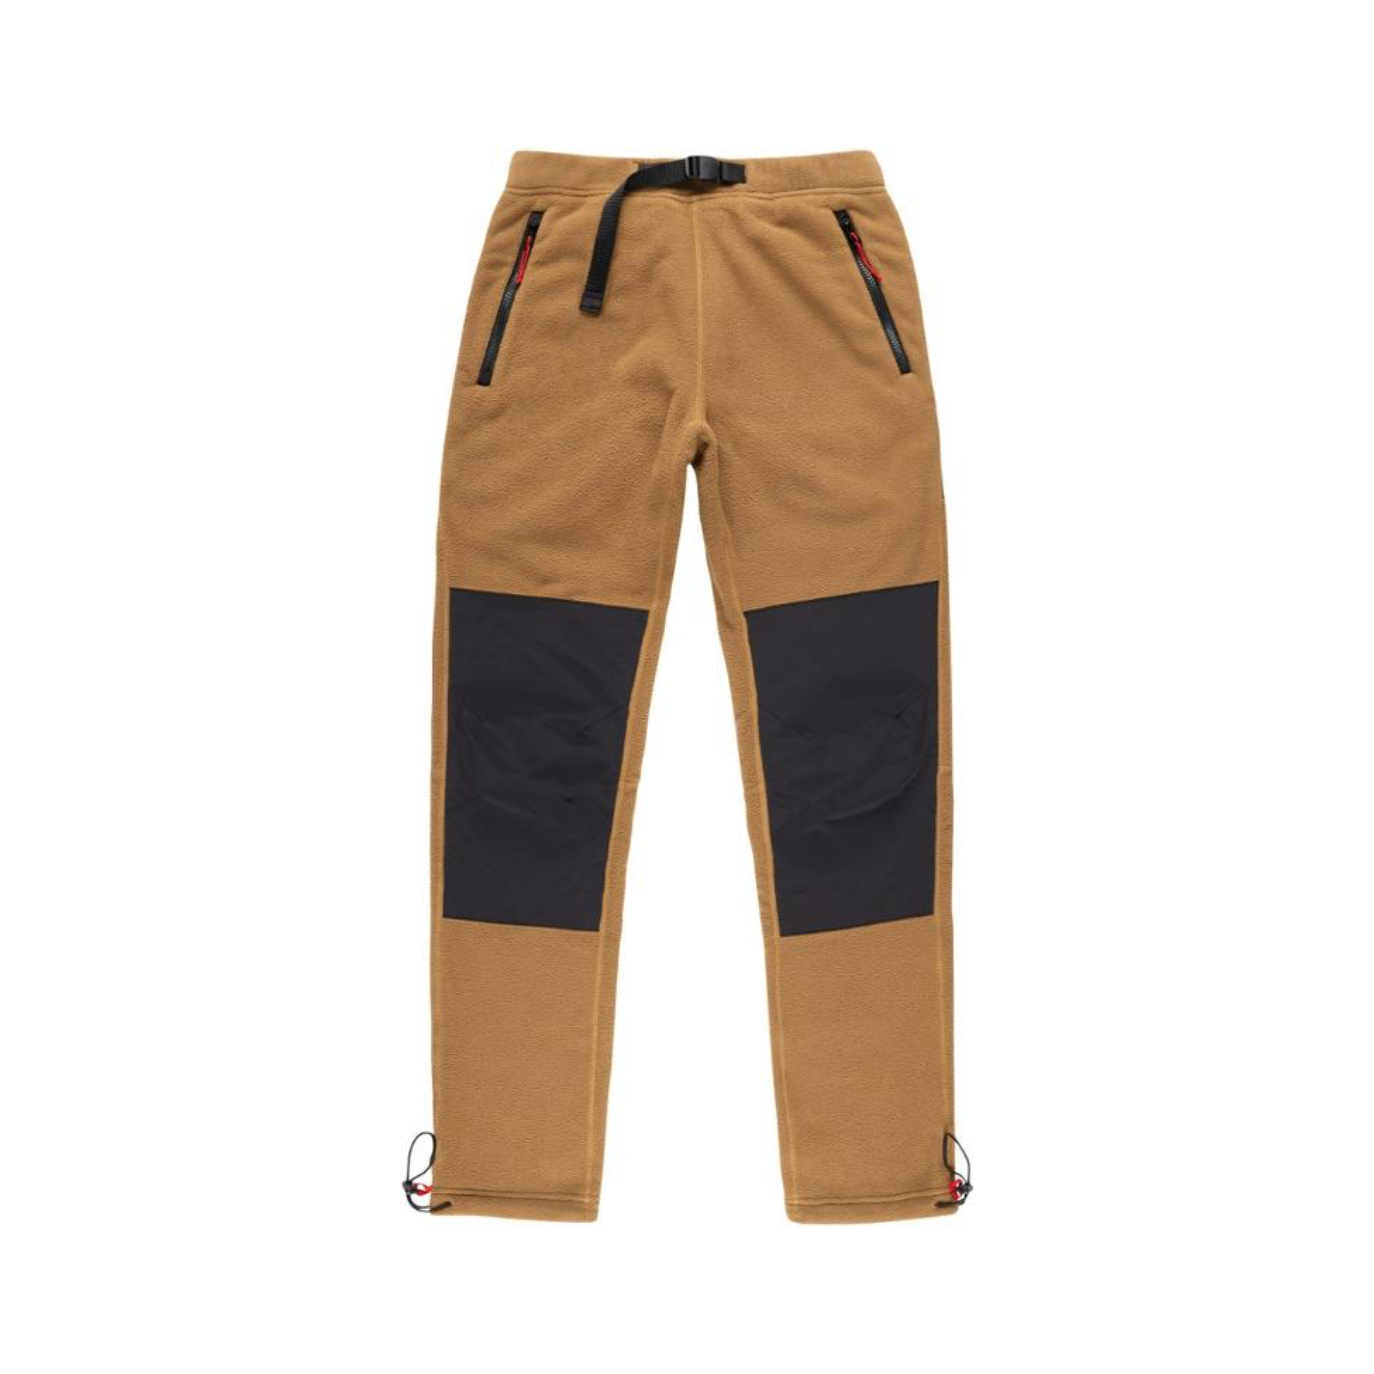 Pantalons Mountain Fleece Unisex||Unisex Mountain Fleece Pants